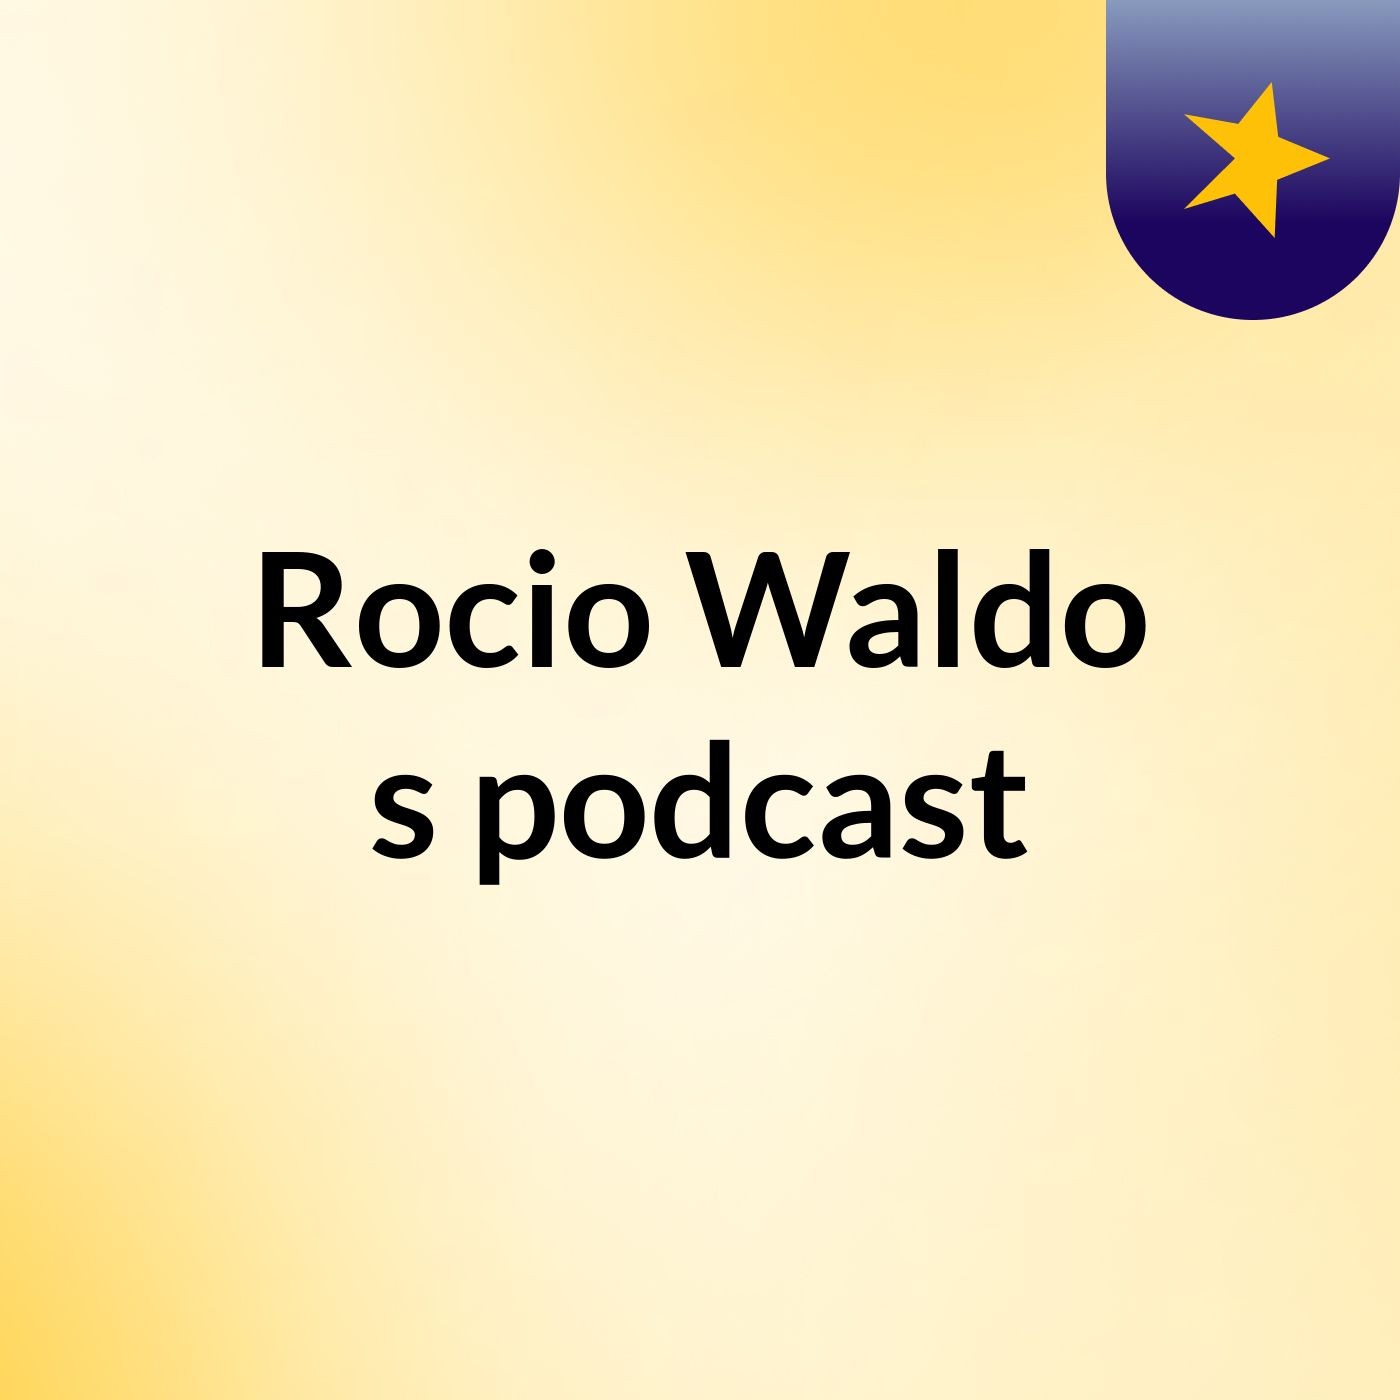 Rocio Waldo's podcast